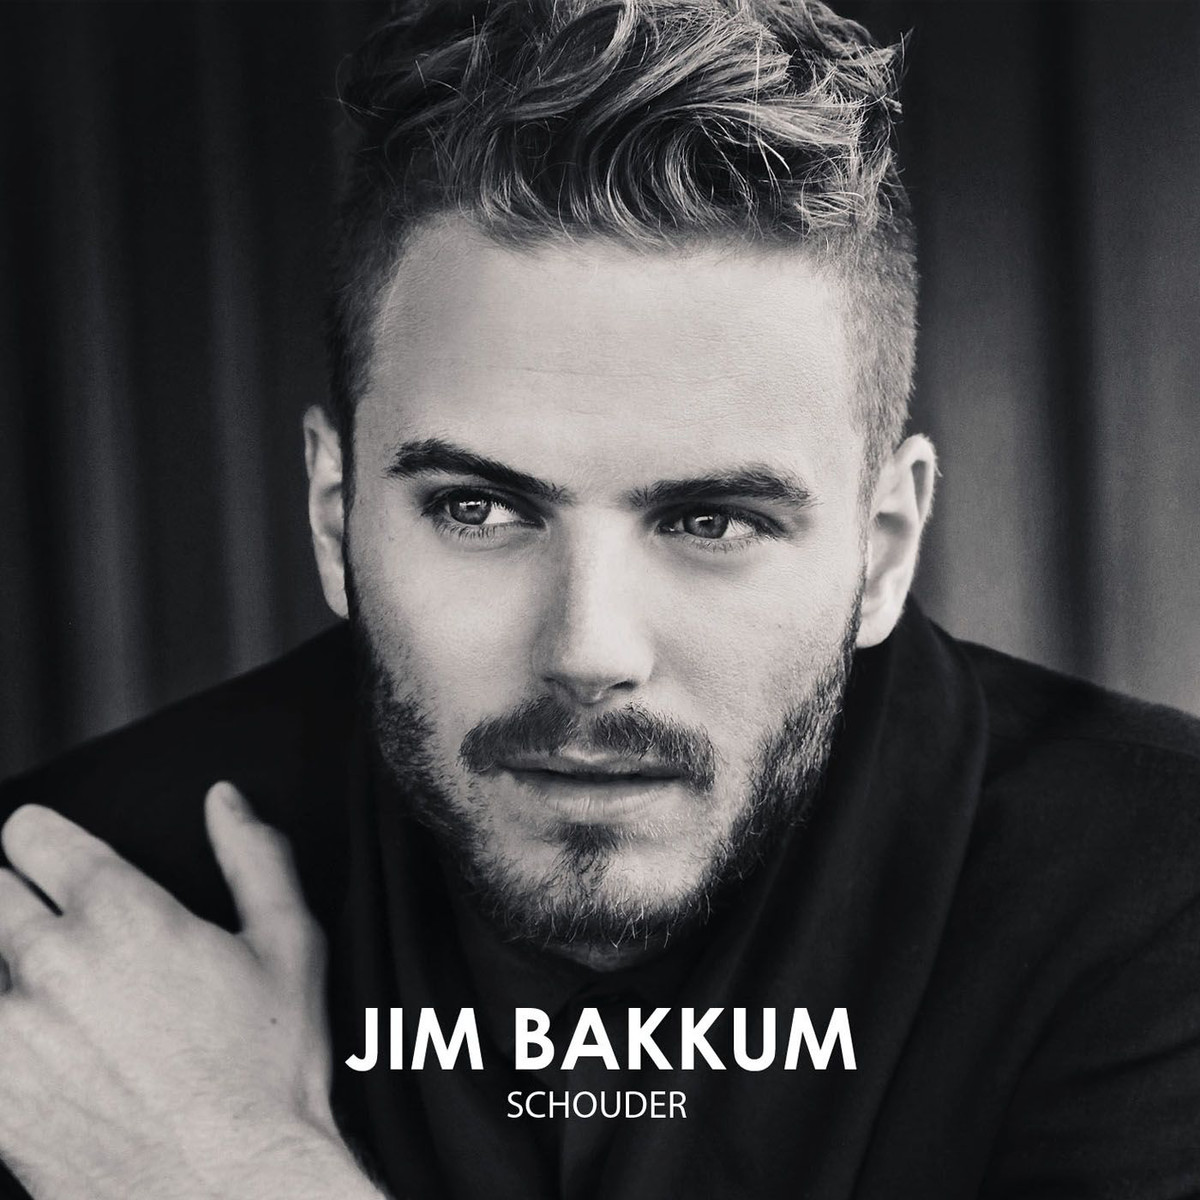 Jim Bakkum - Schouder EP (album artwork cover)